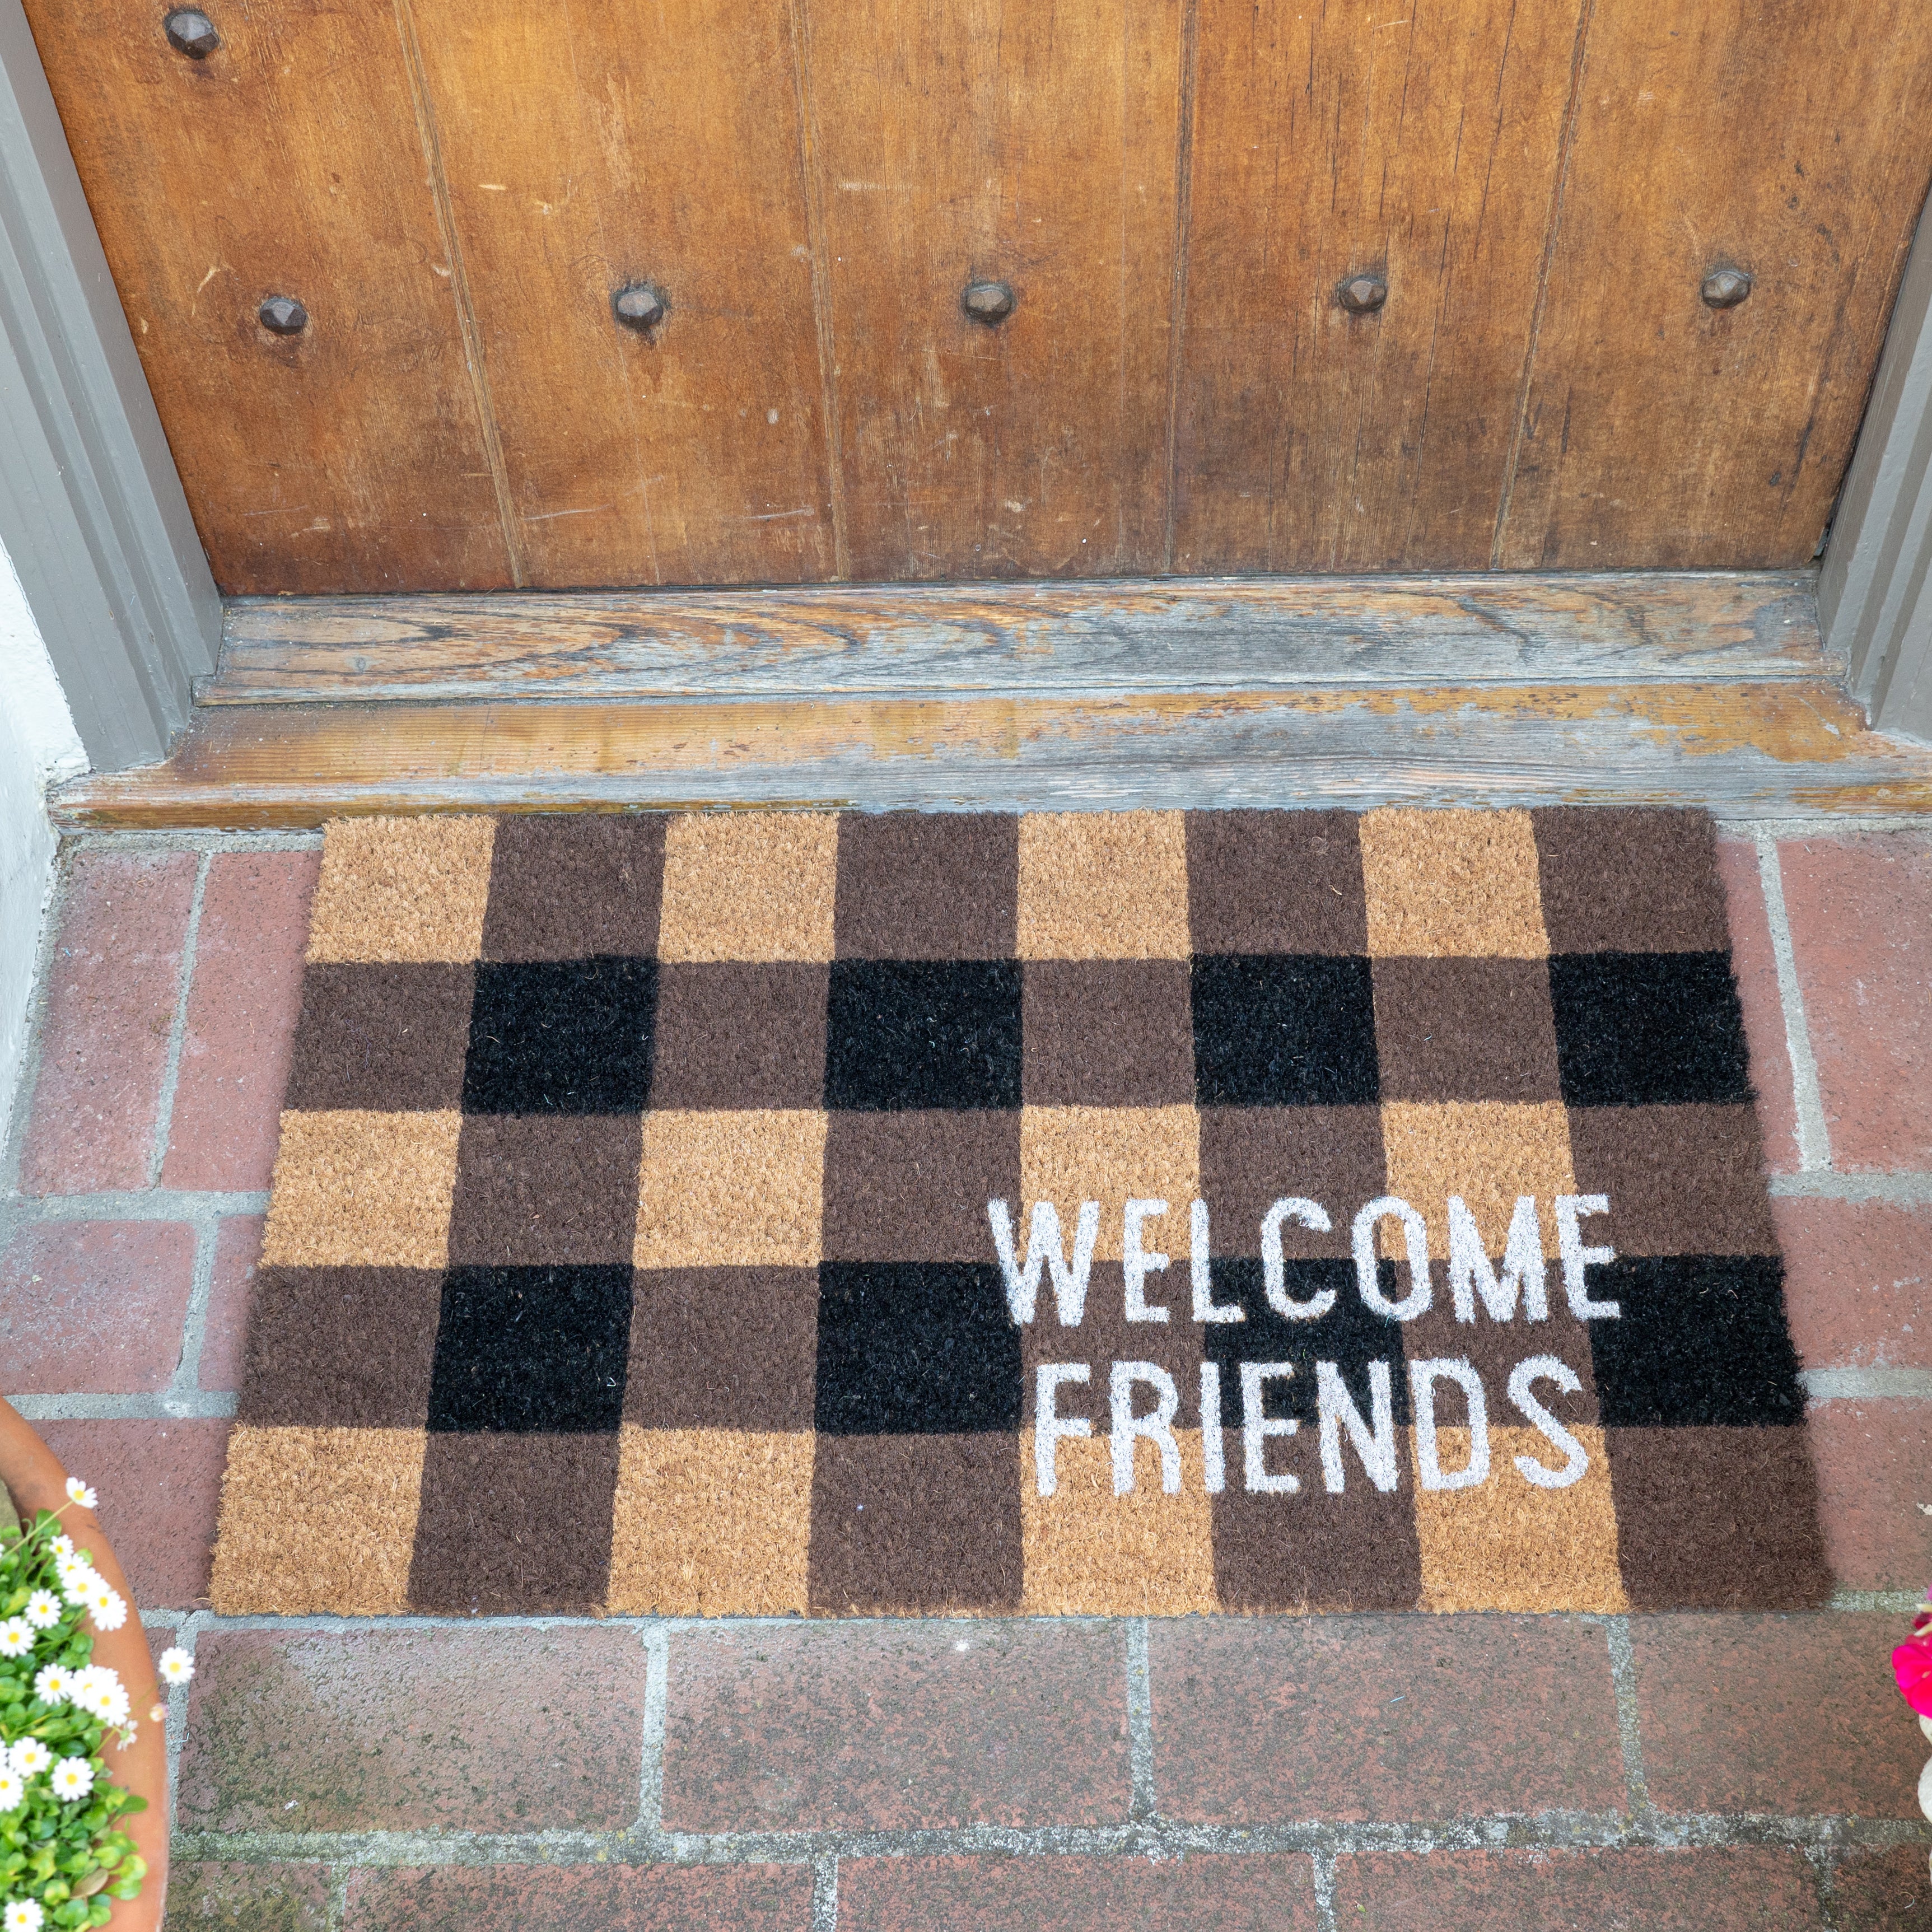 Superio Stone Coir Welcome Doormat - Natural